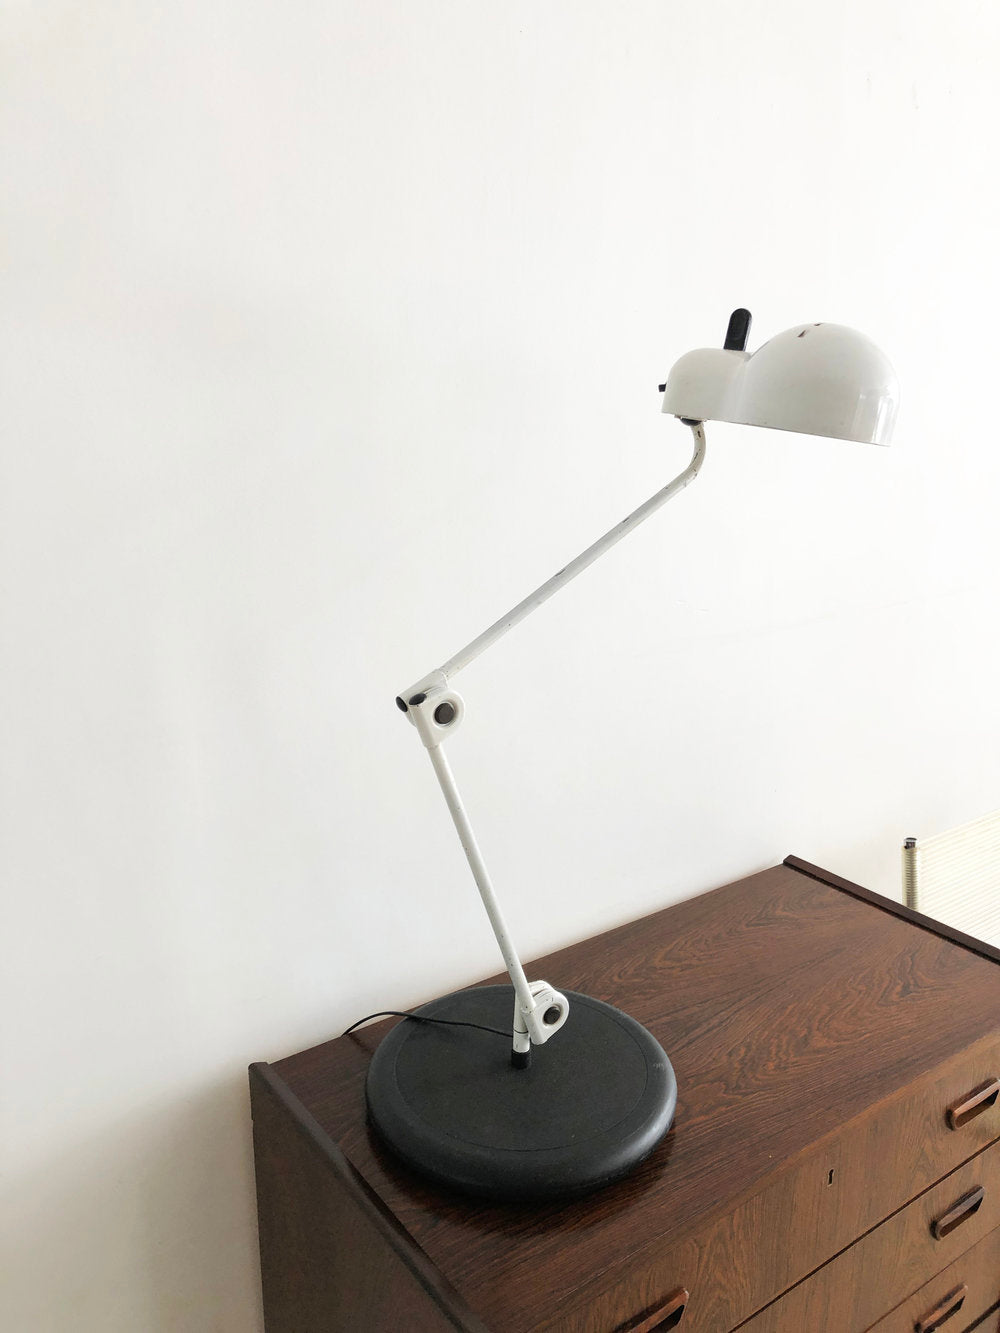 1960s "Topo" Task Lamp Designed by Joe Colombo for Stilnovo